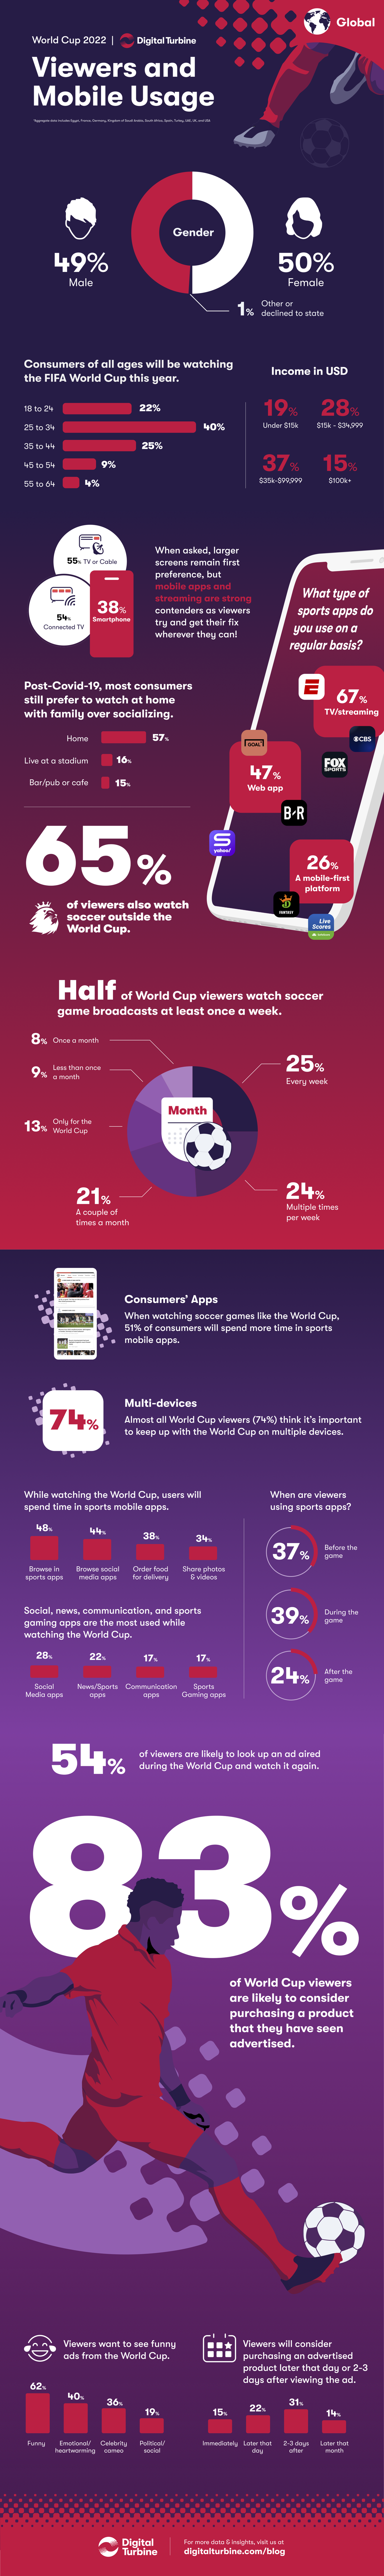 Qatar 2022 World Cup: Unusual & Fun Facts and Statistics